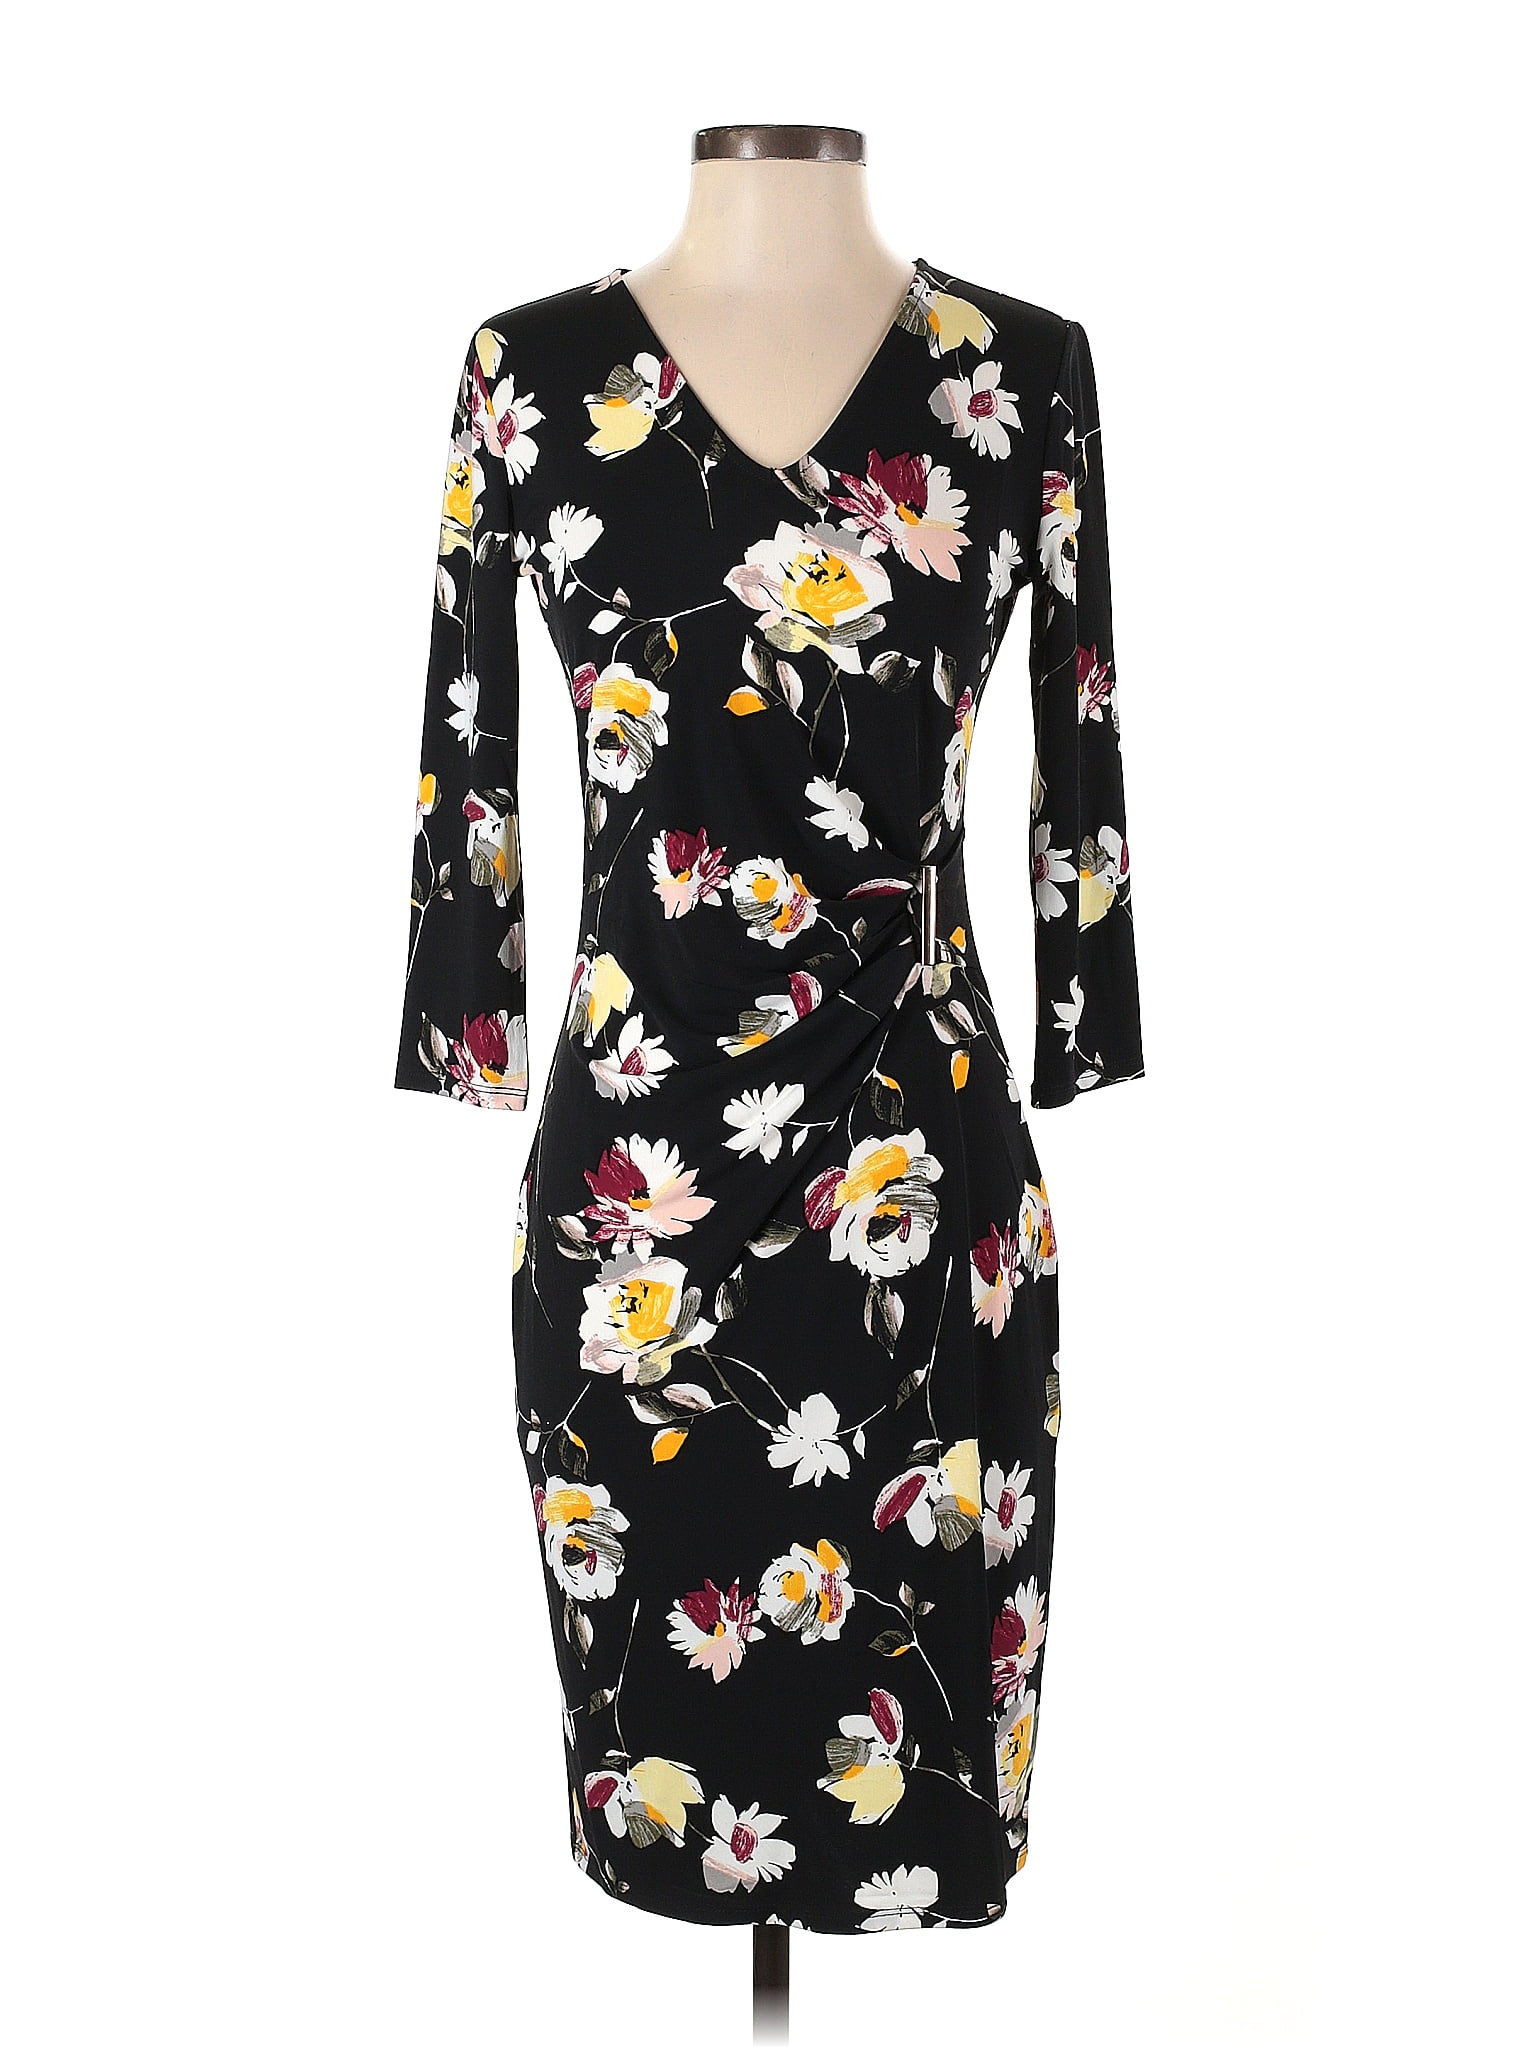 White House Black Market Floral Black Casual Dress Size 2 - 68% off